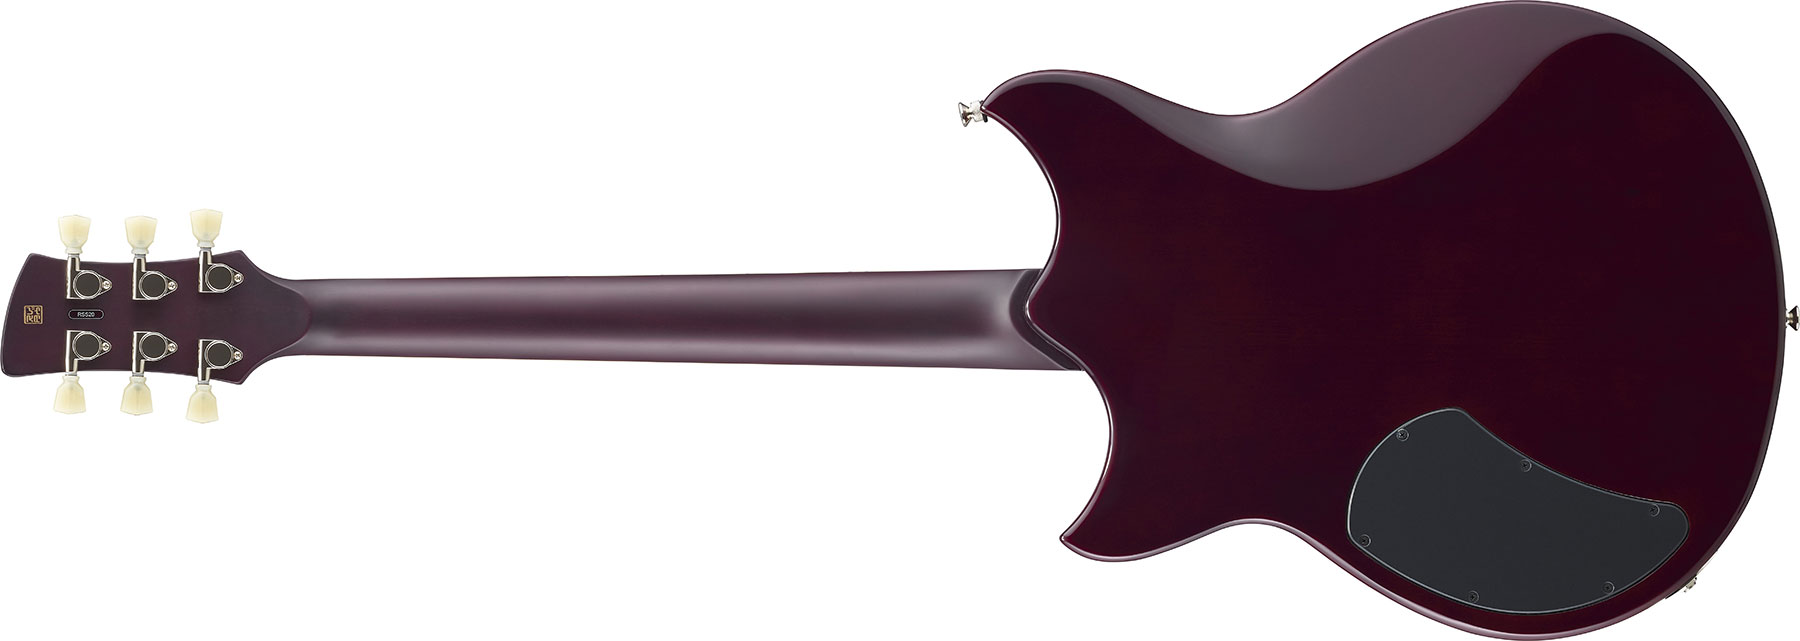 Yamaha Rss20 Revstar Standard Hh Ht Rw - Black - Guitarra eléctrica de doble corte. - Variation 2